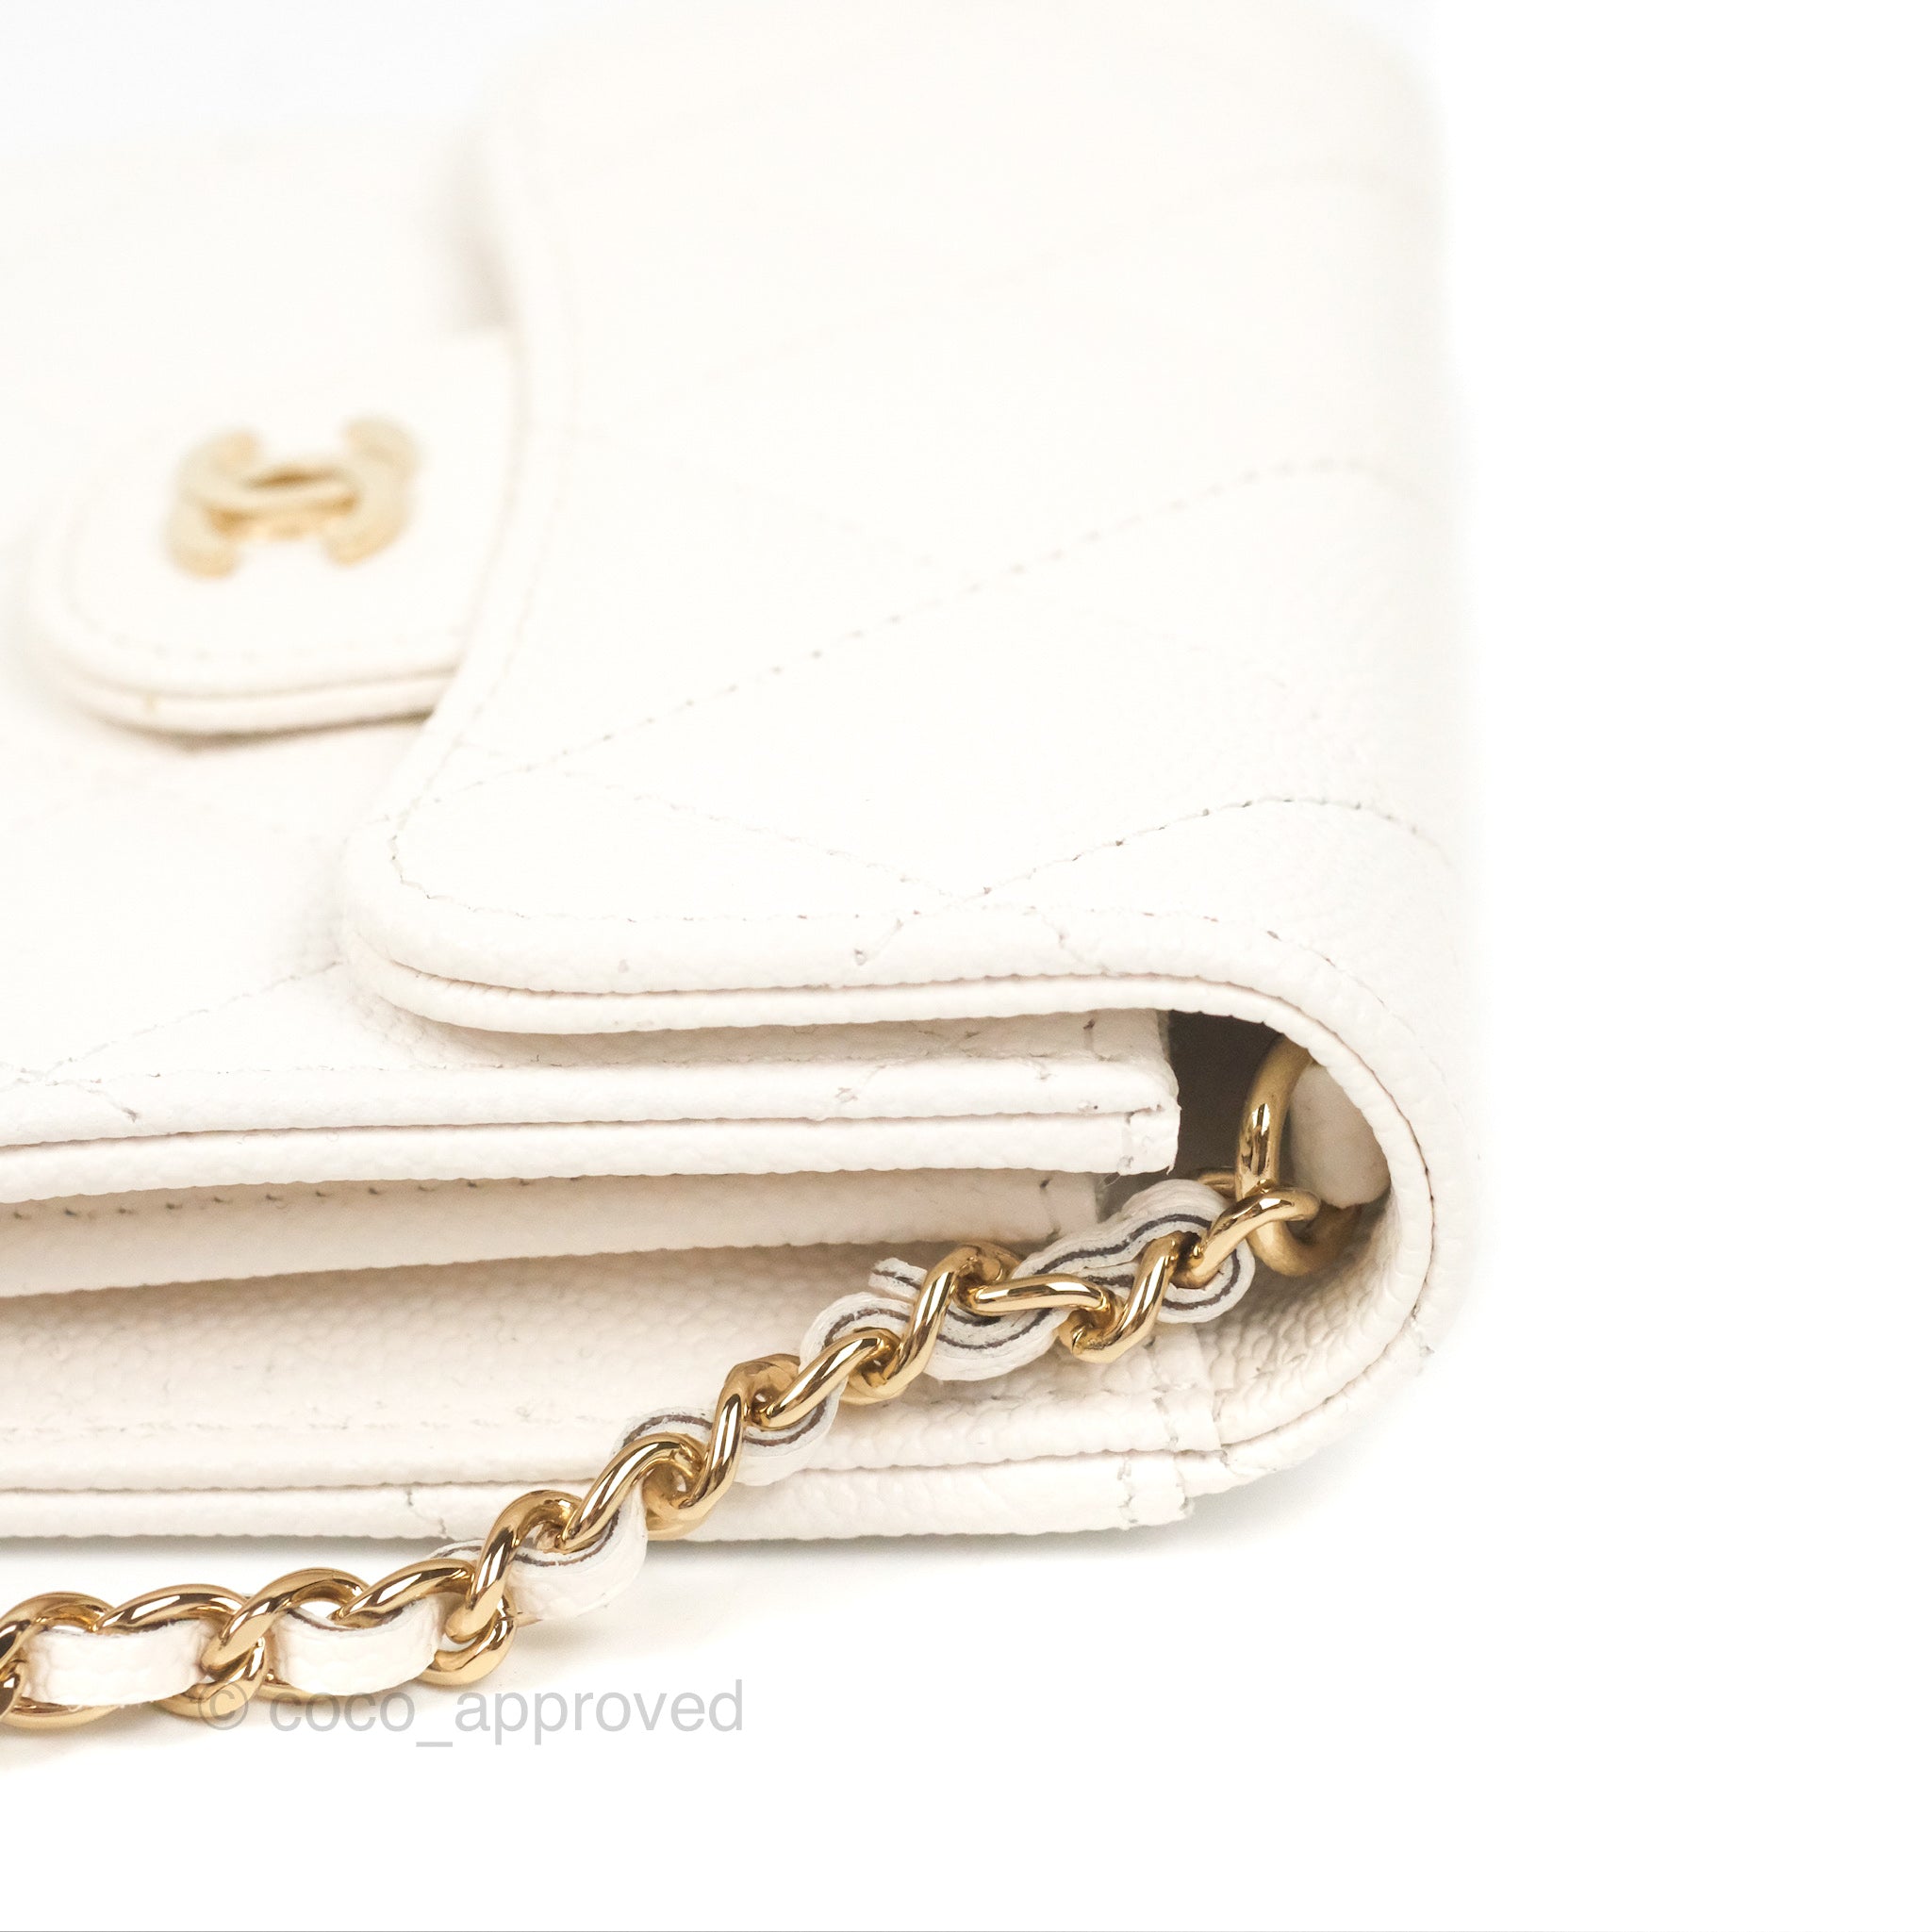 Chanel Mini Wallet With Chain White Caviar Gold Hardware – Coco